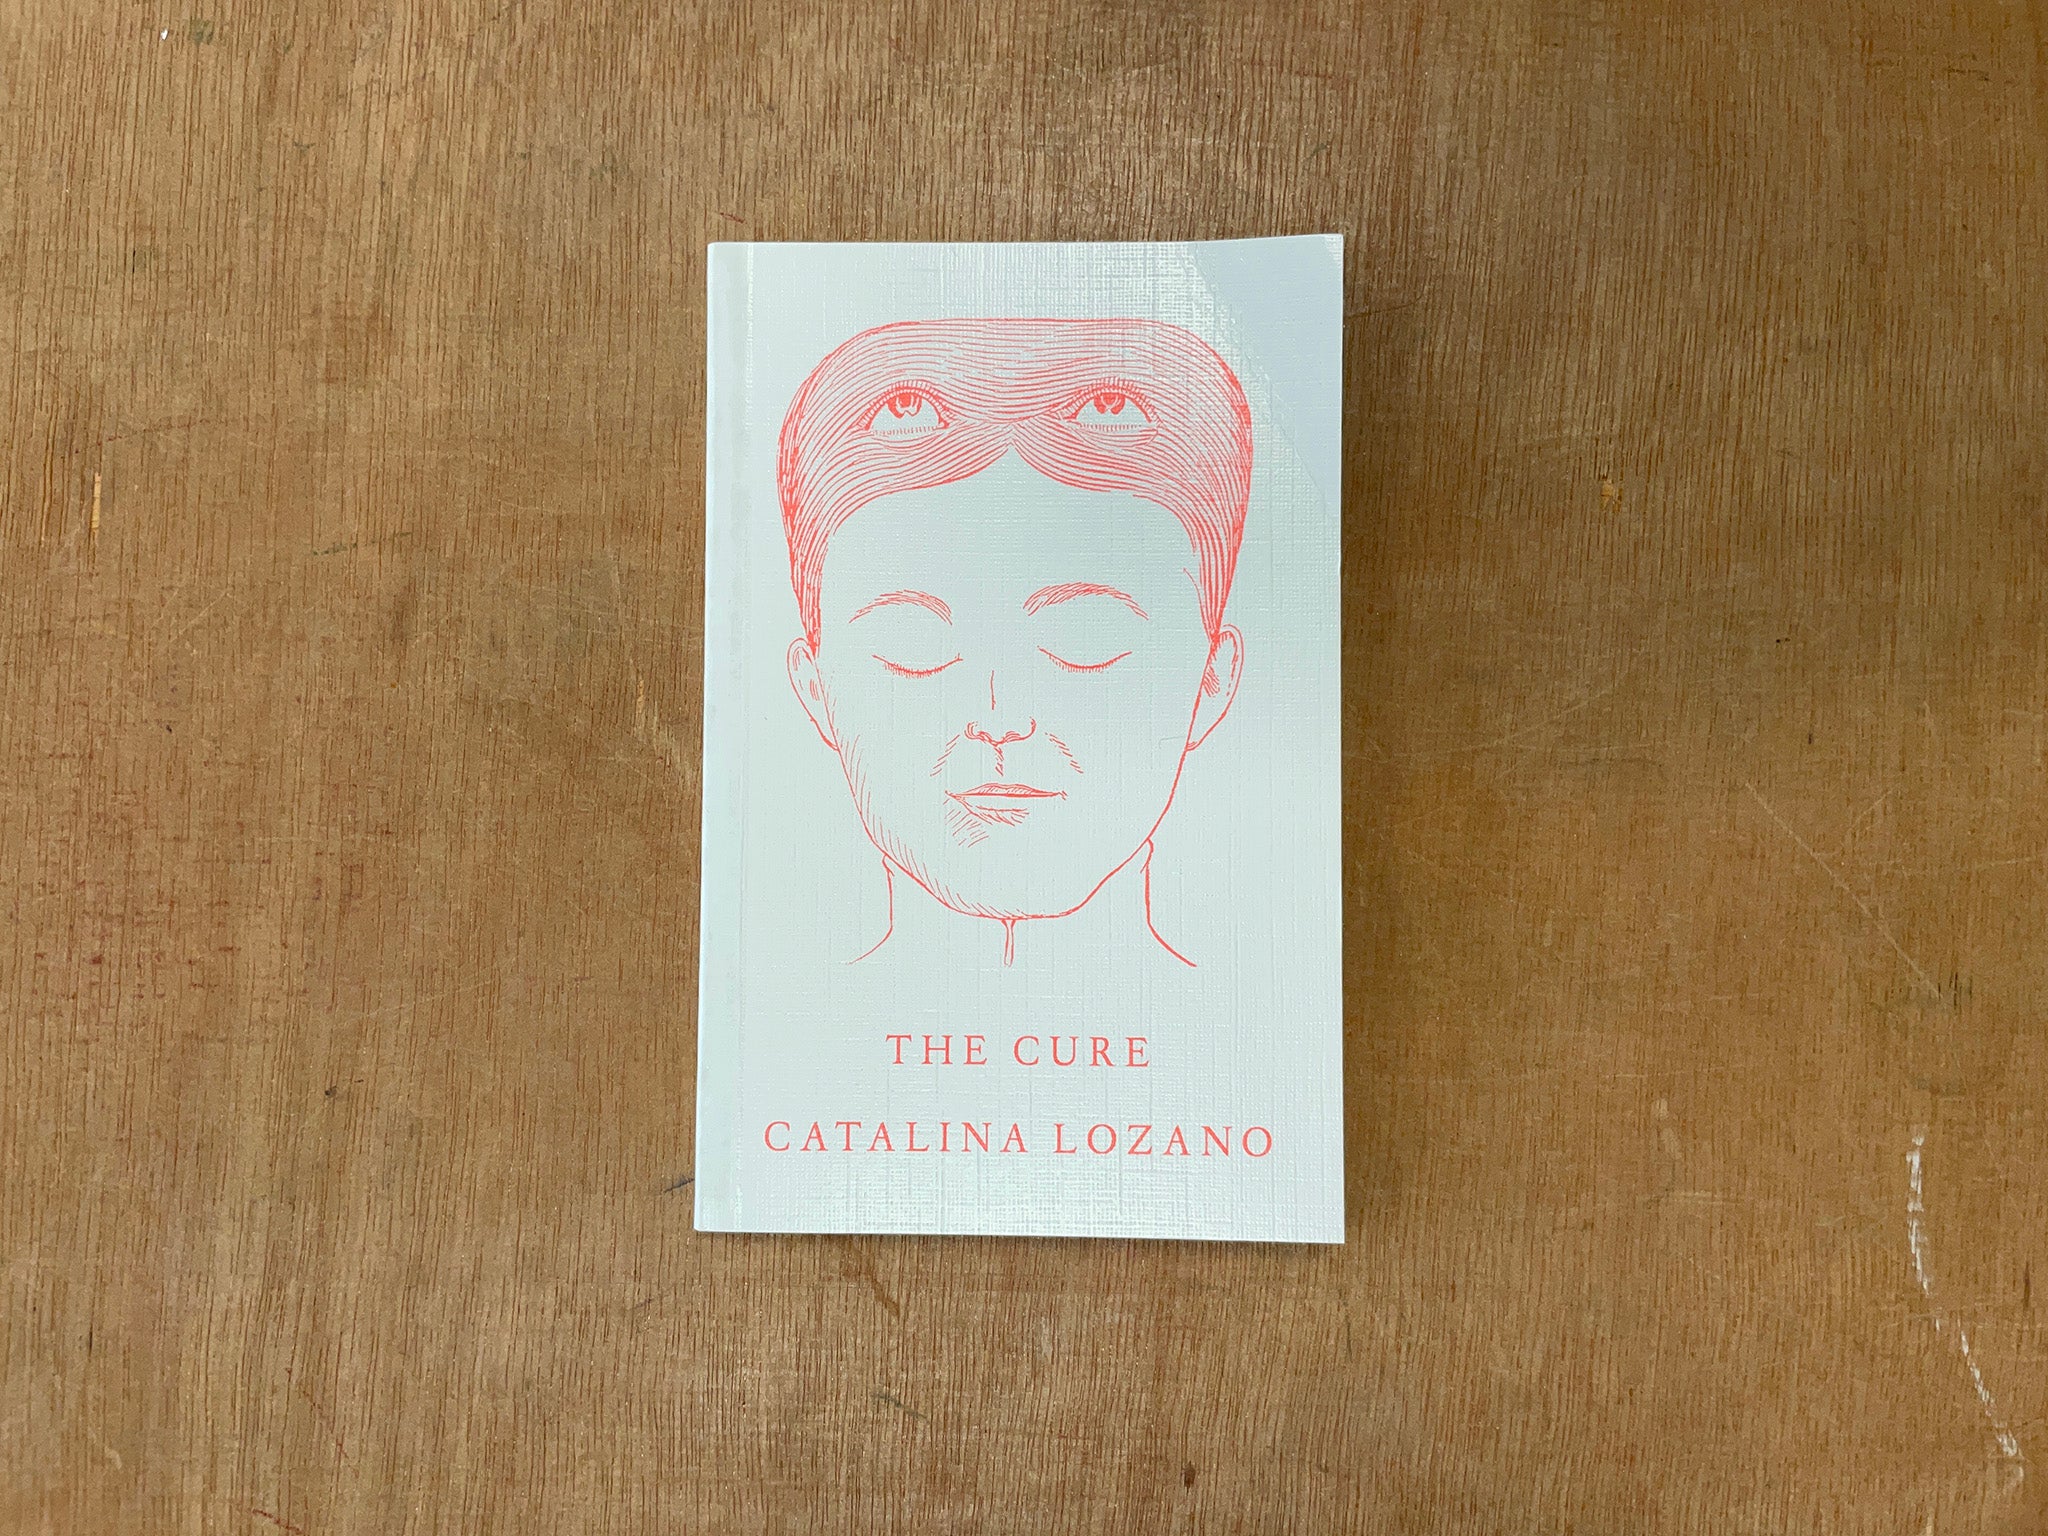 THE CURE by Catalina Lozano